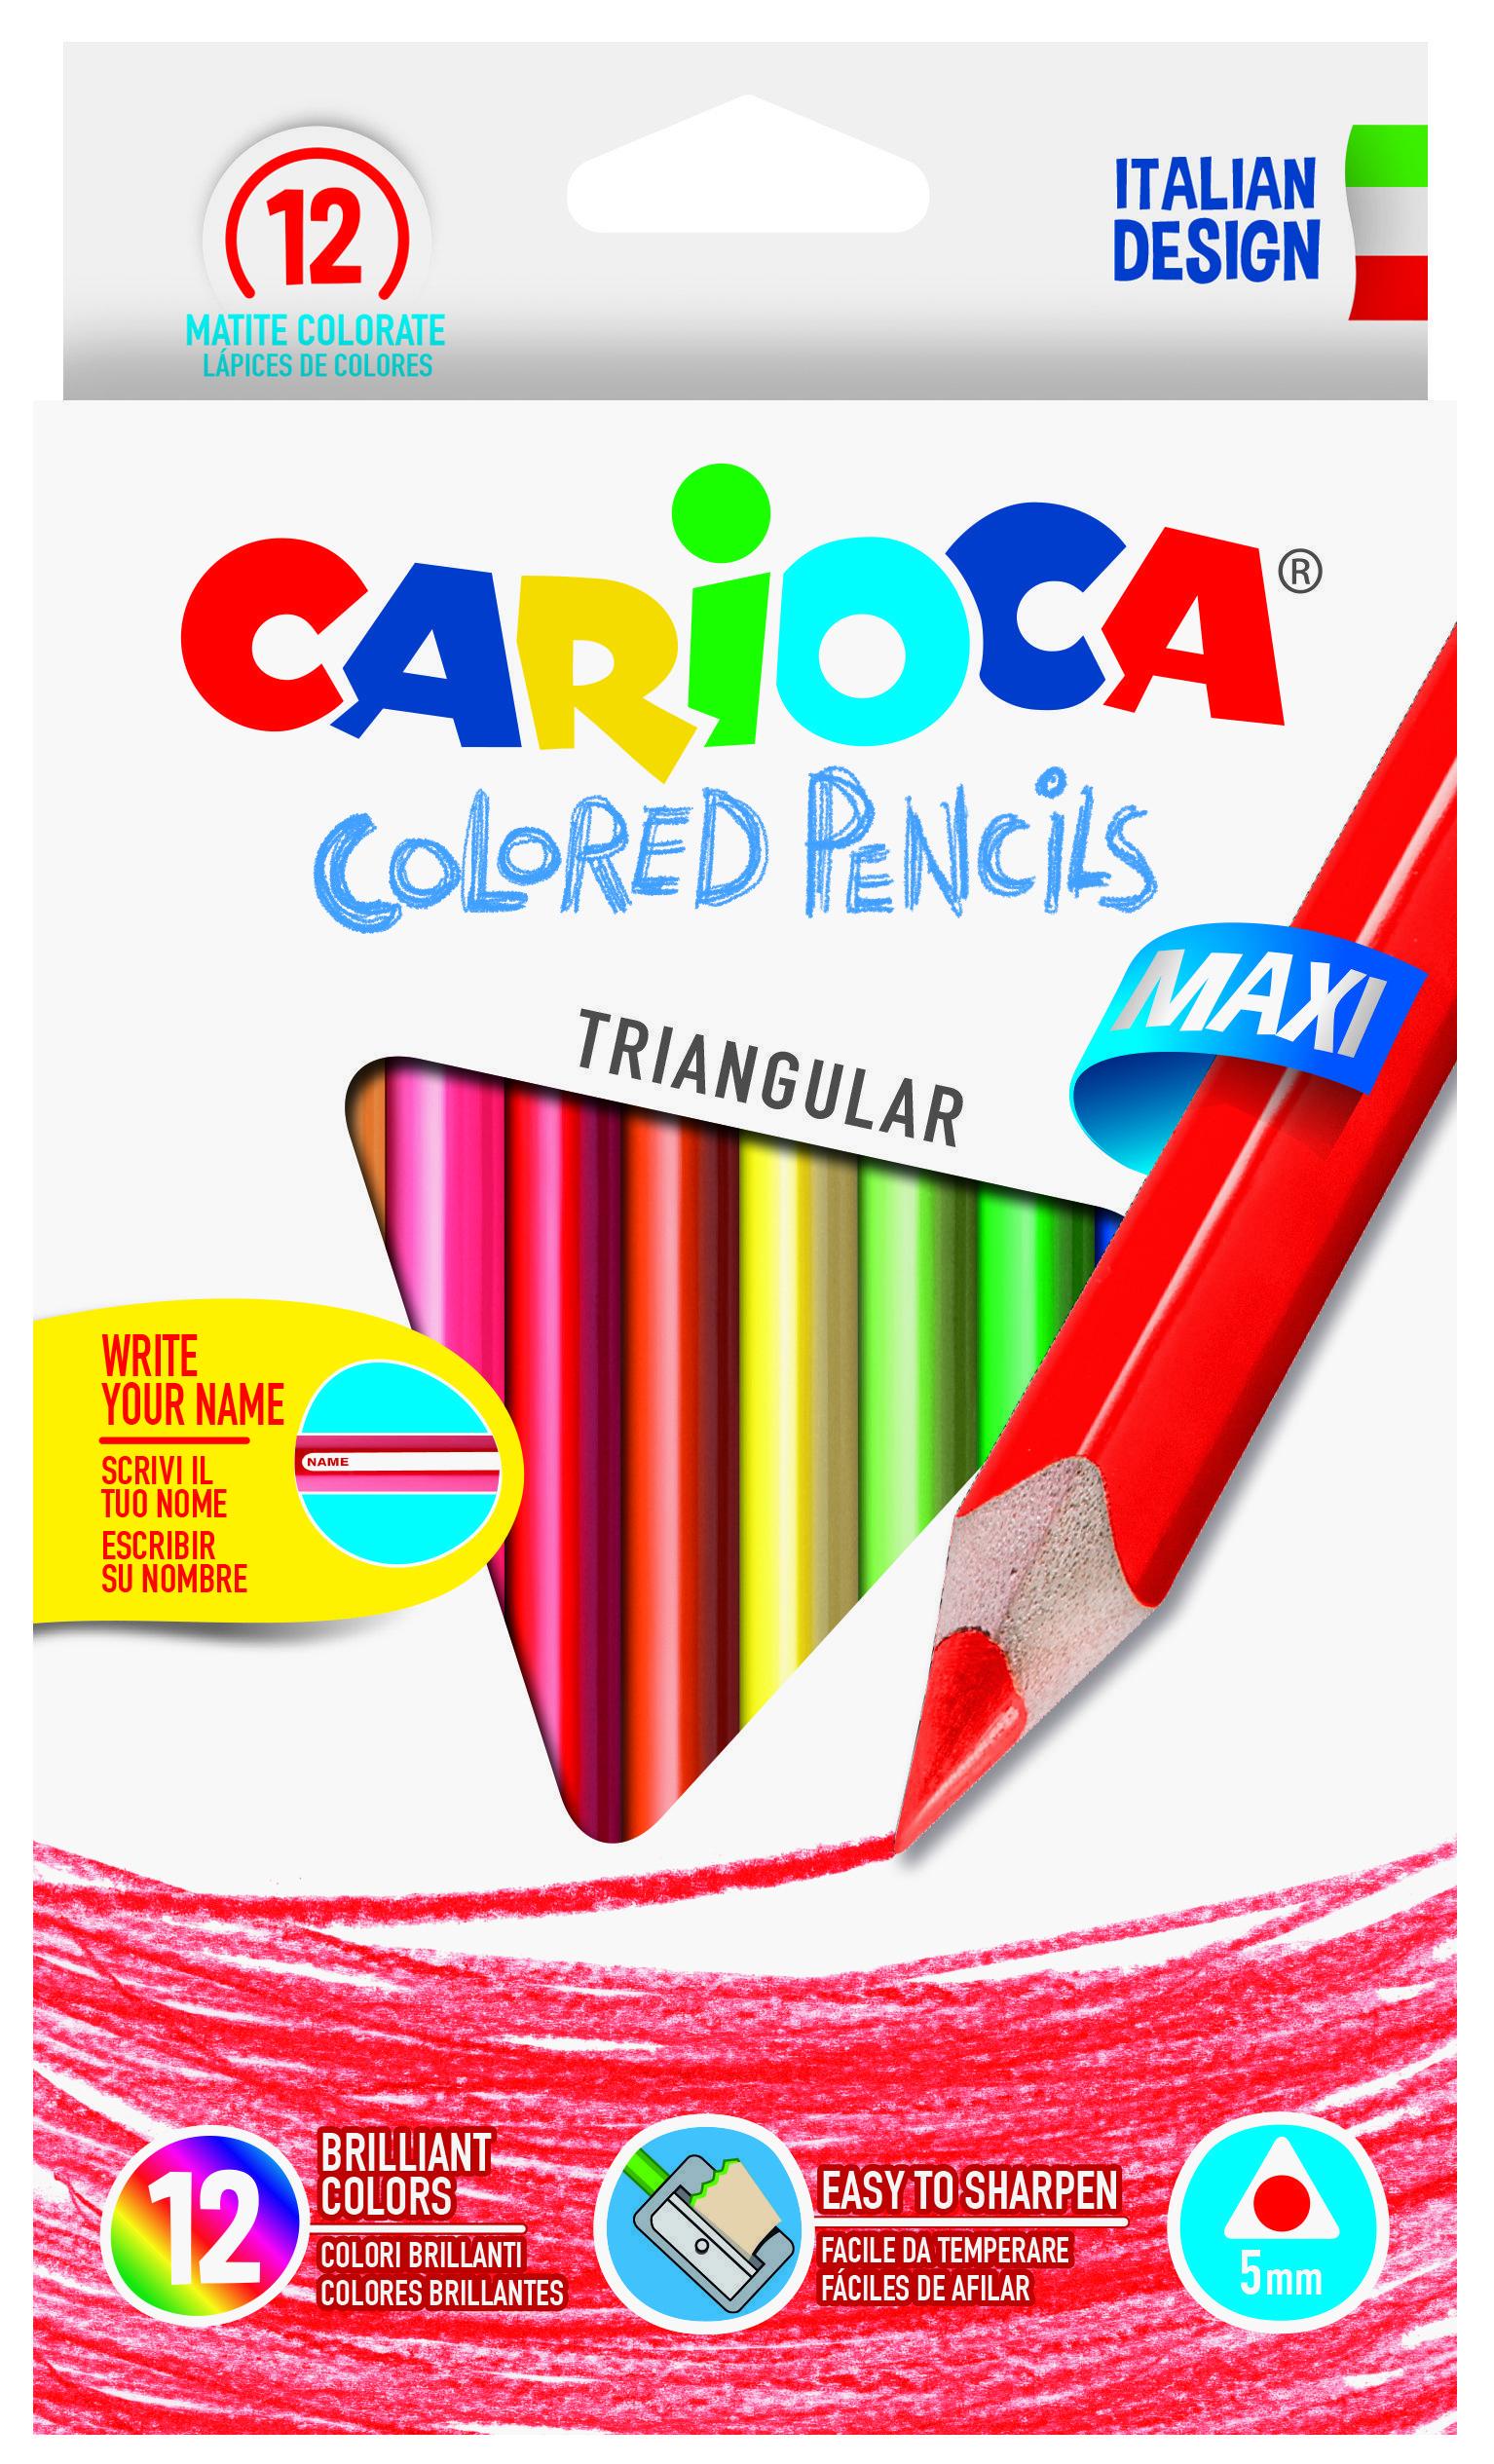 Carioca Colored Pencils Triangular Maxi – Gamebreaker